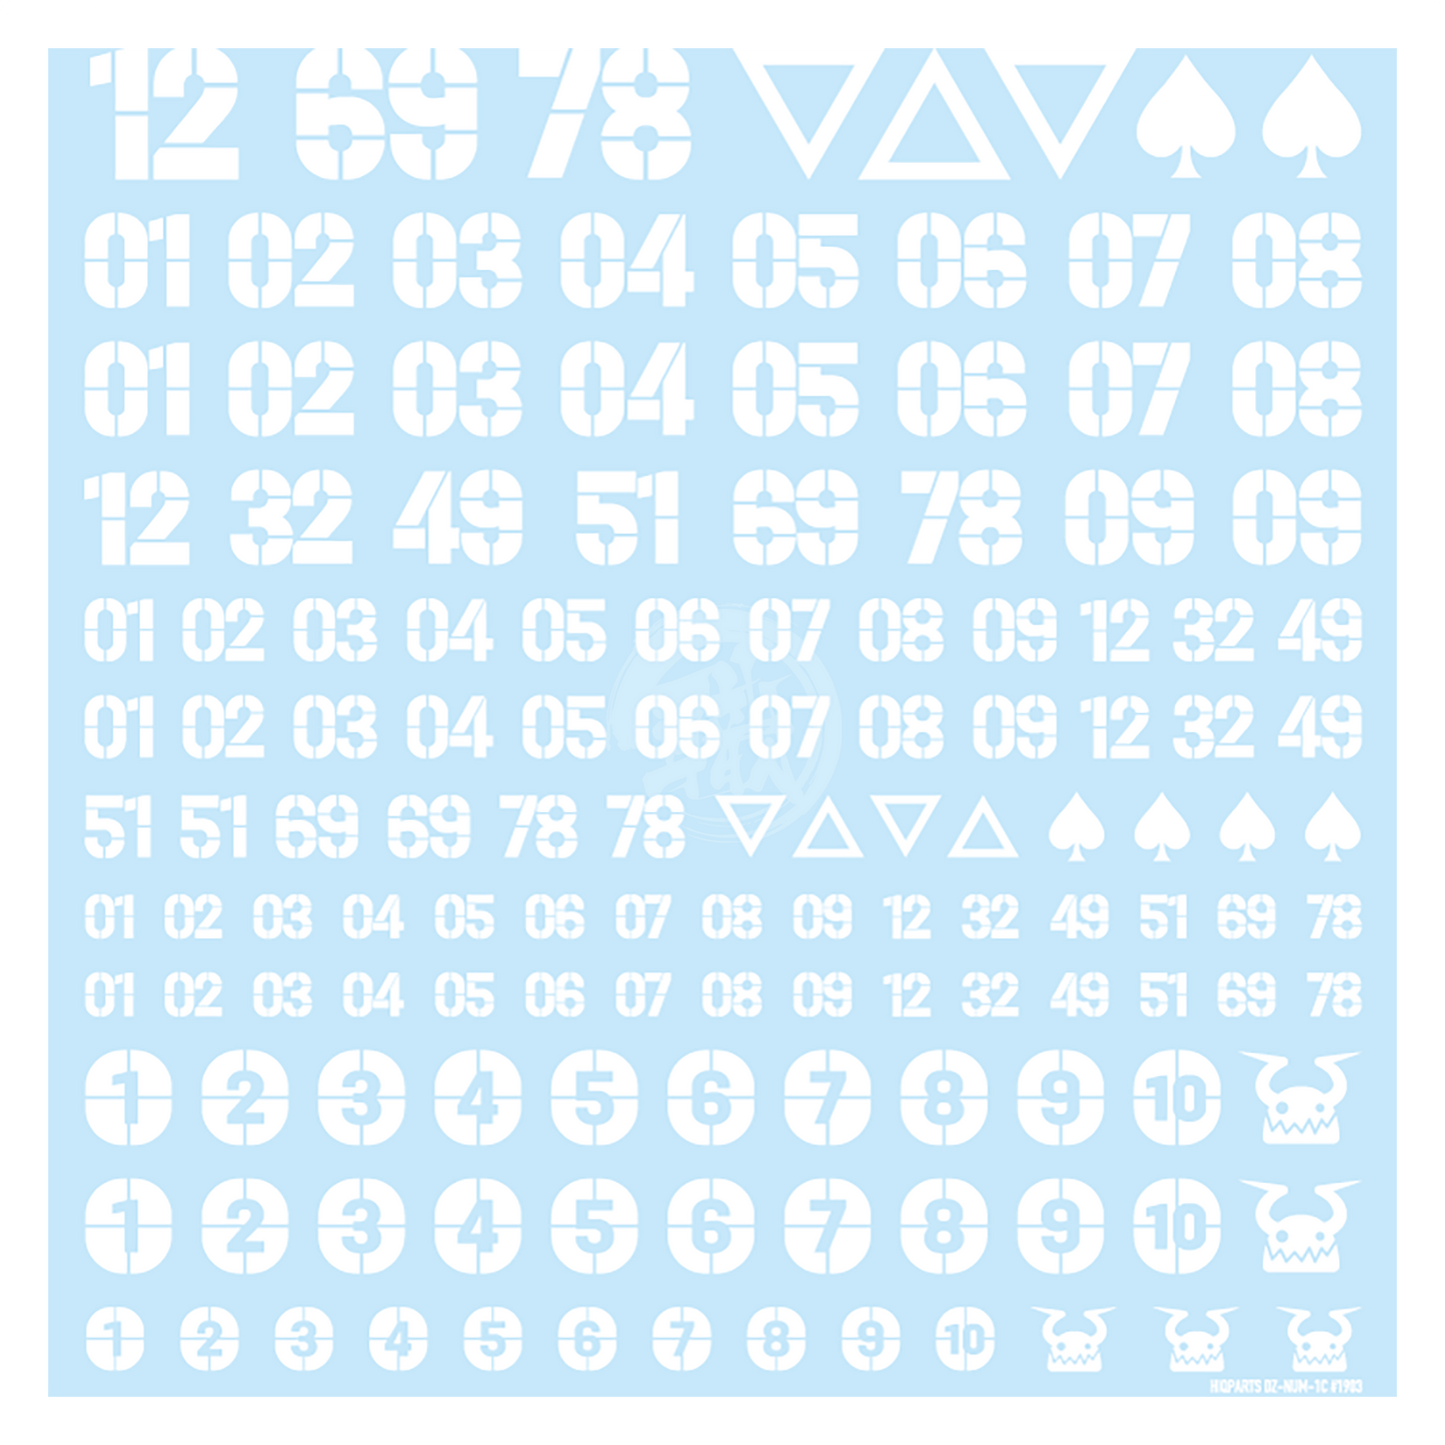 HIQParts - DZ Number Decal [White] - ShokuninGunpla